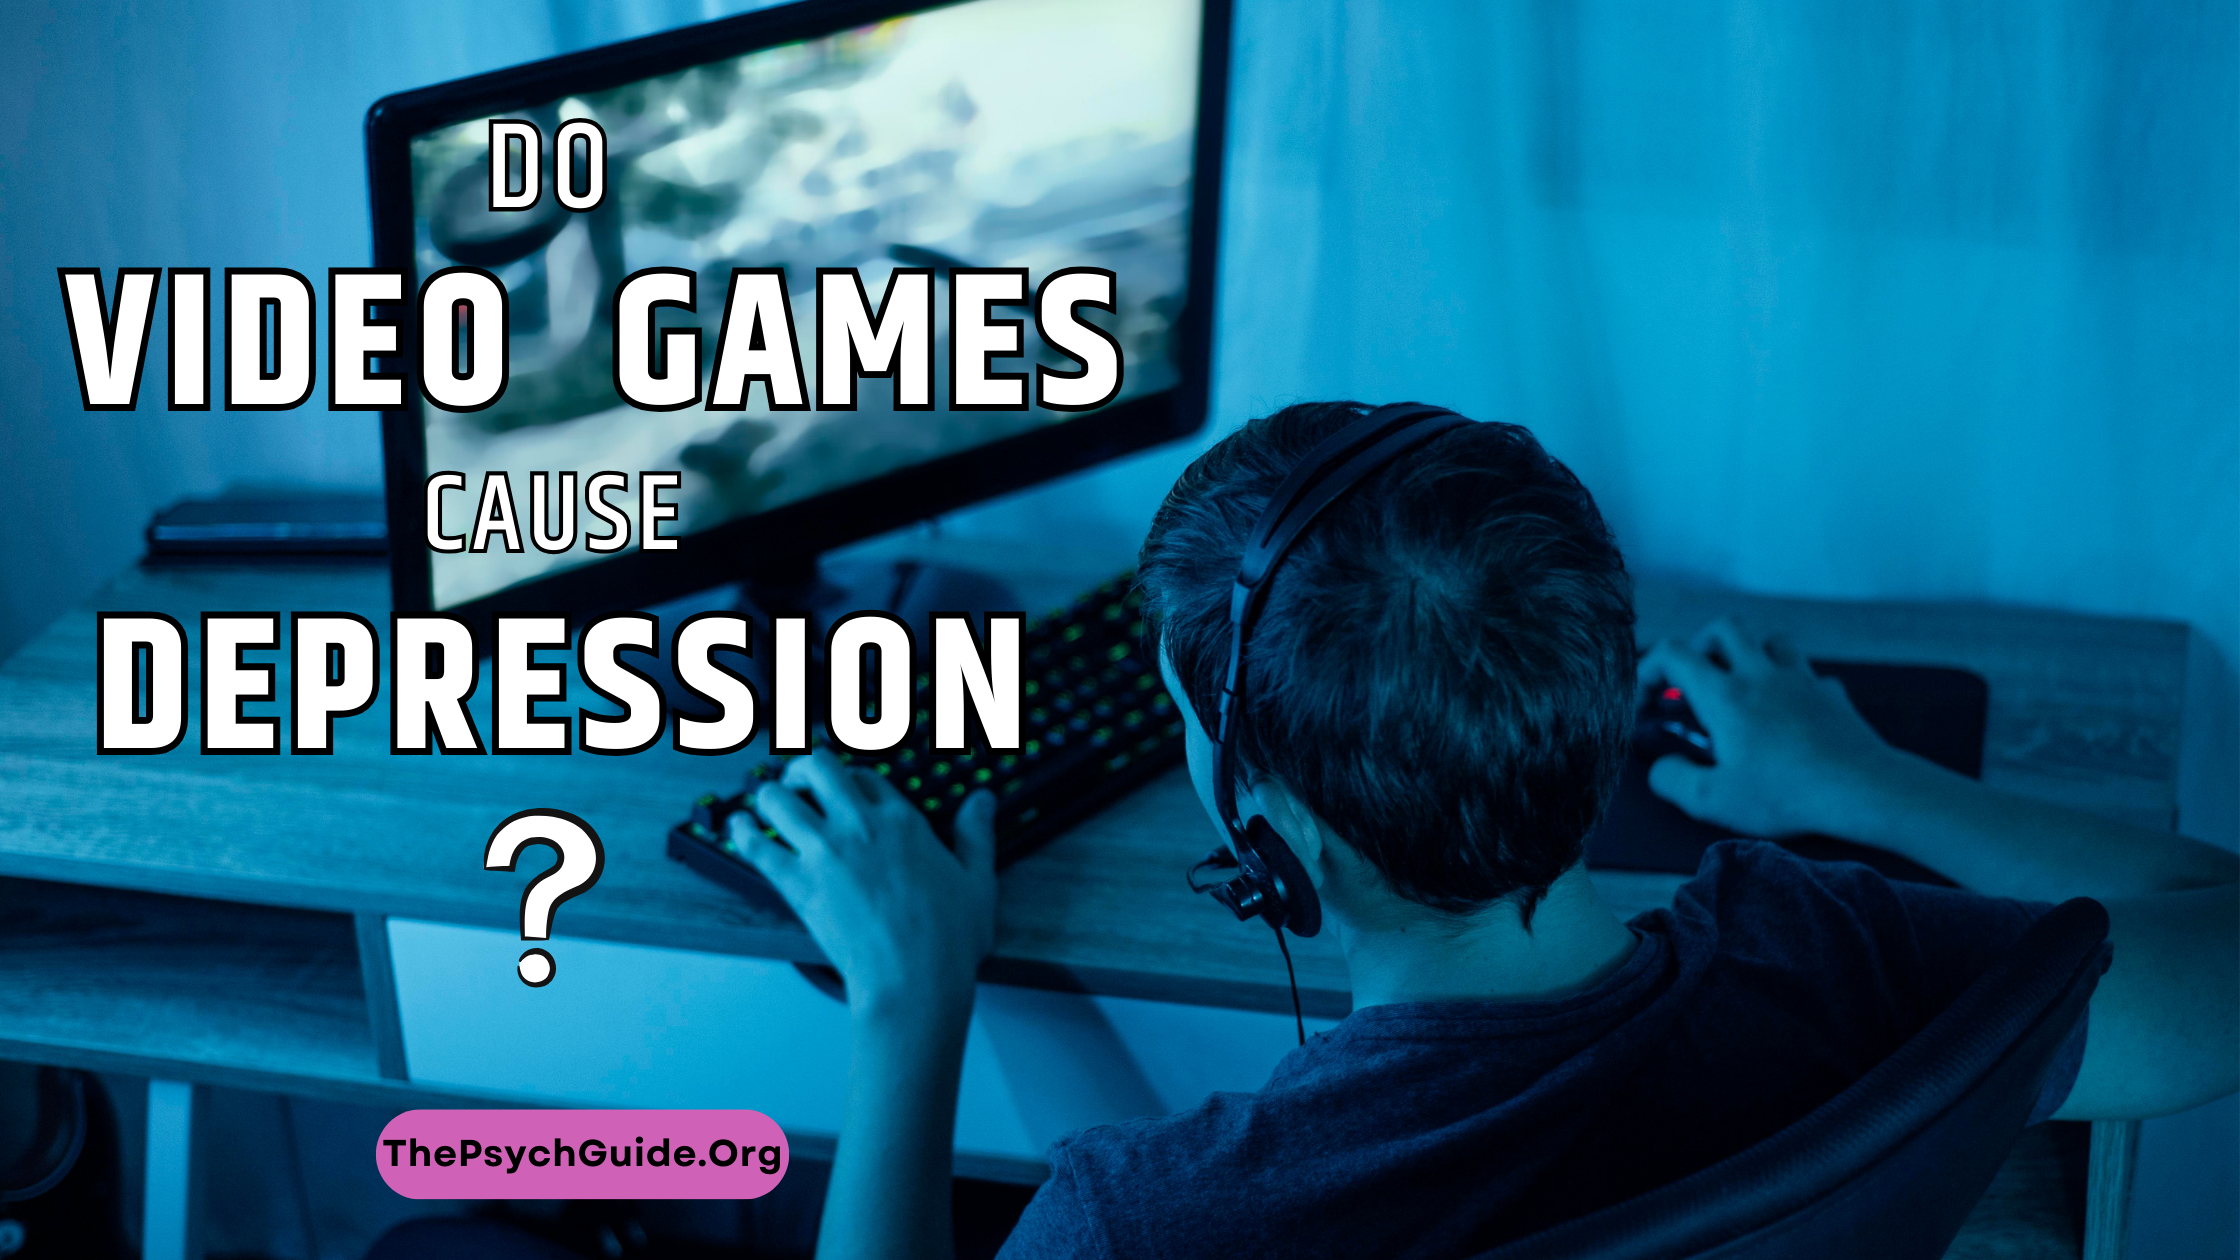 Do video games cause depression